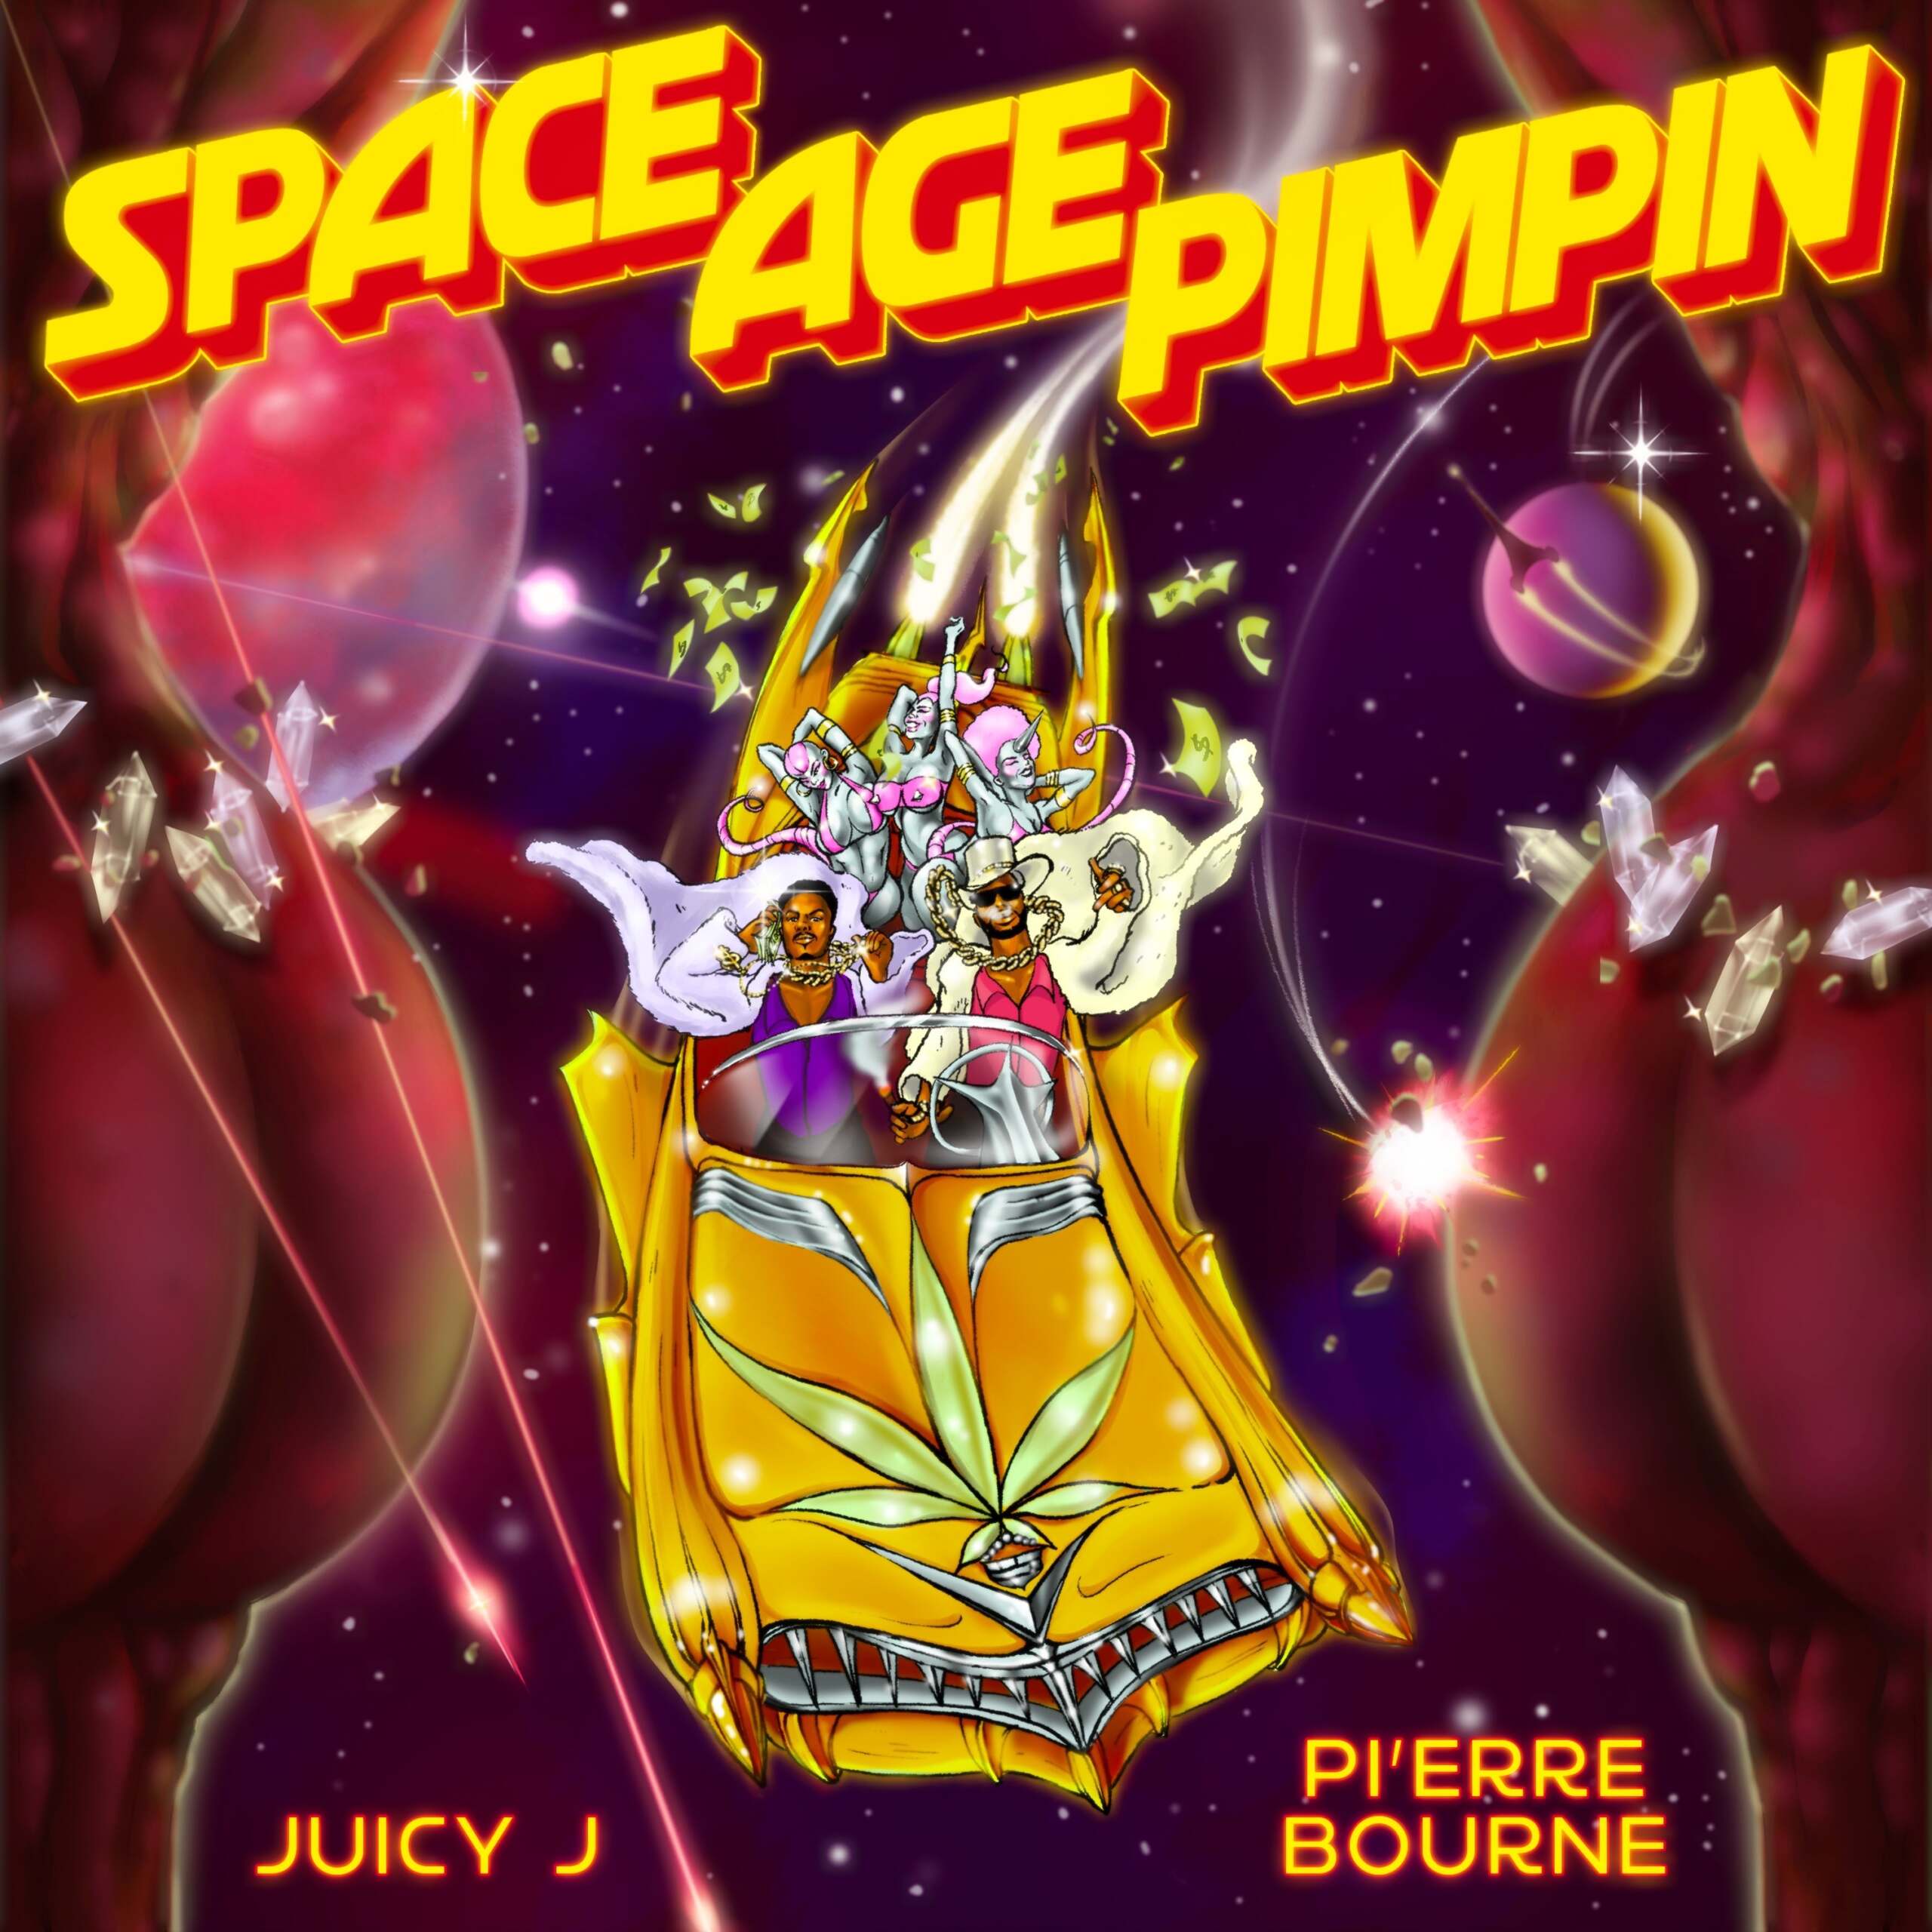 Juicy J & Pi'erre Bourne Drop 'Space Age Pimpin' Album